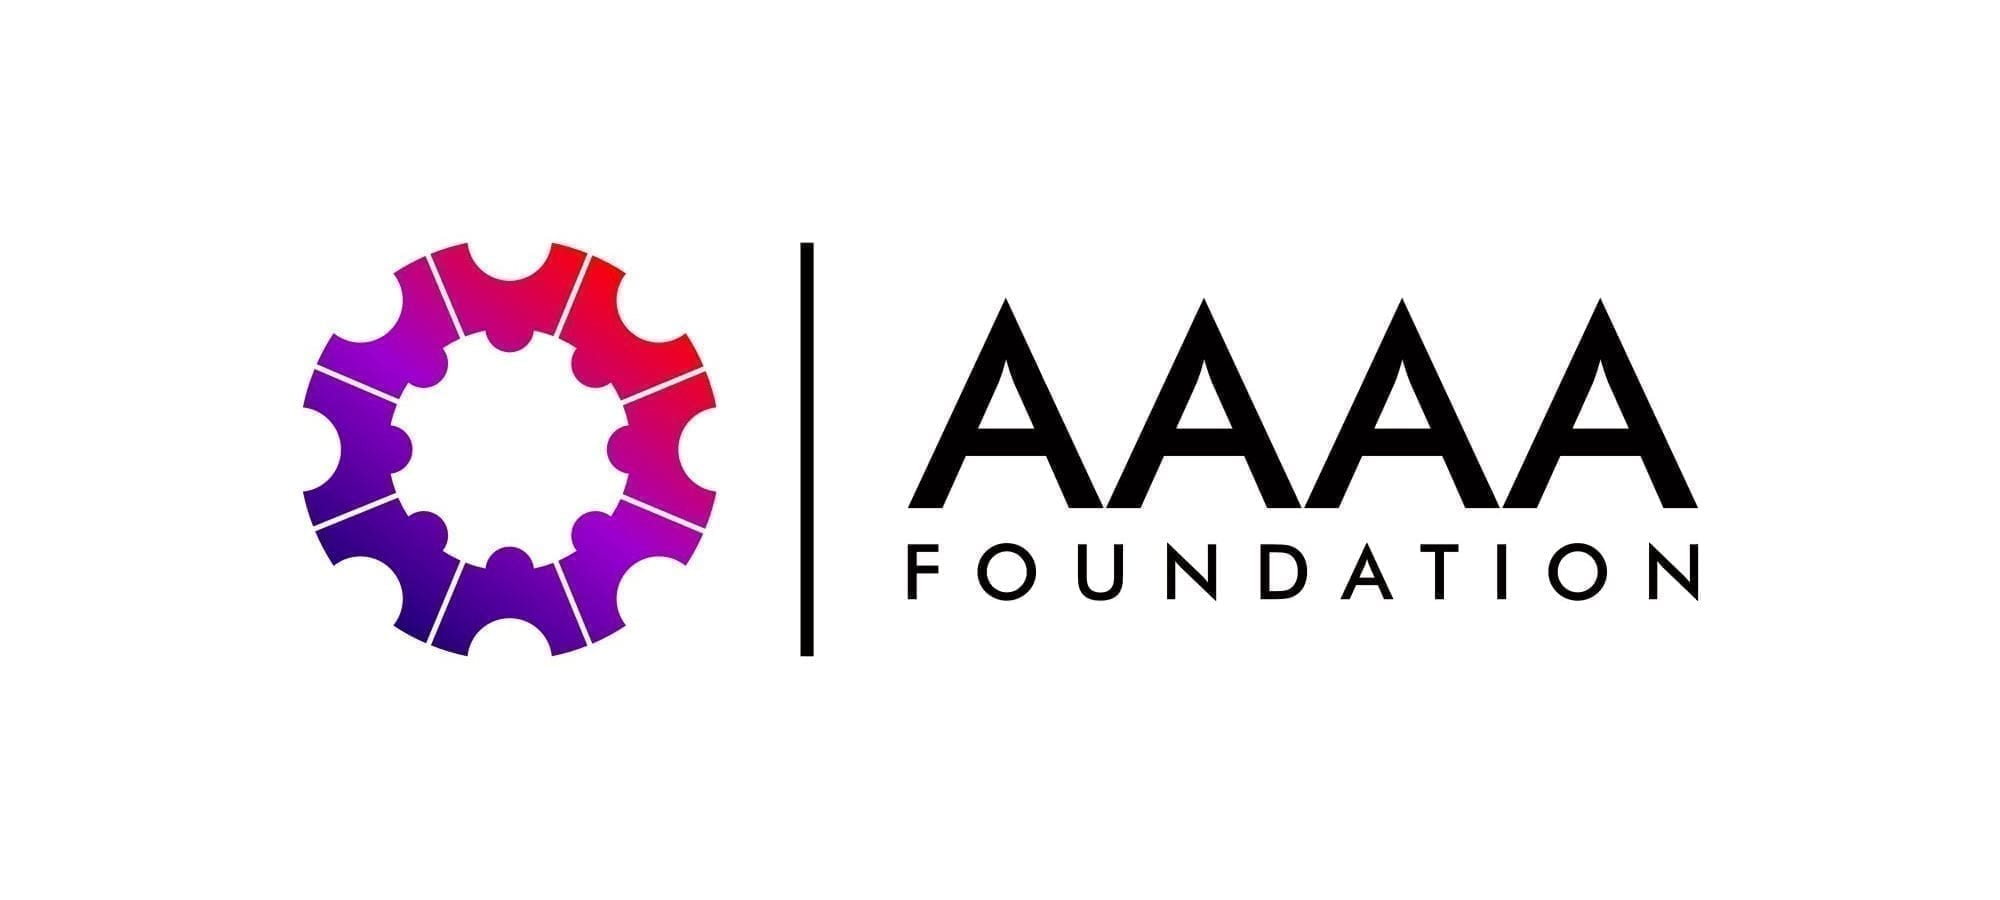 AAAA Foundation